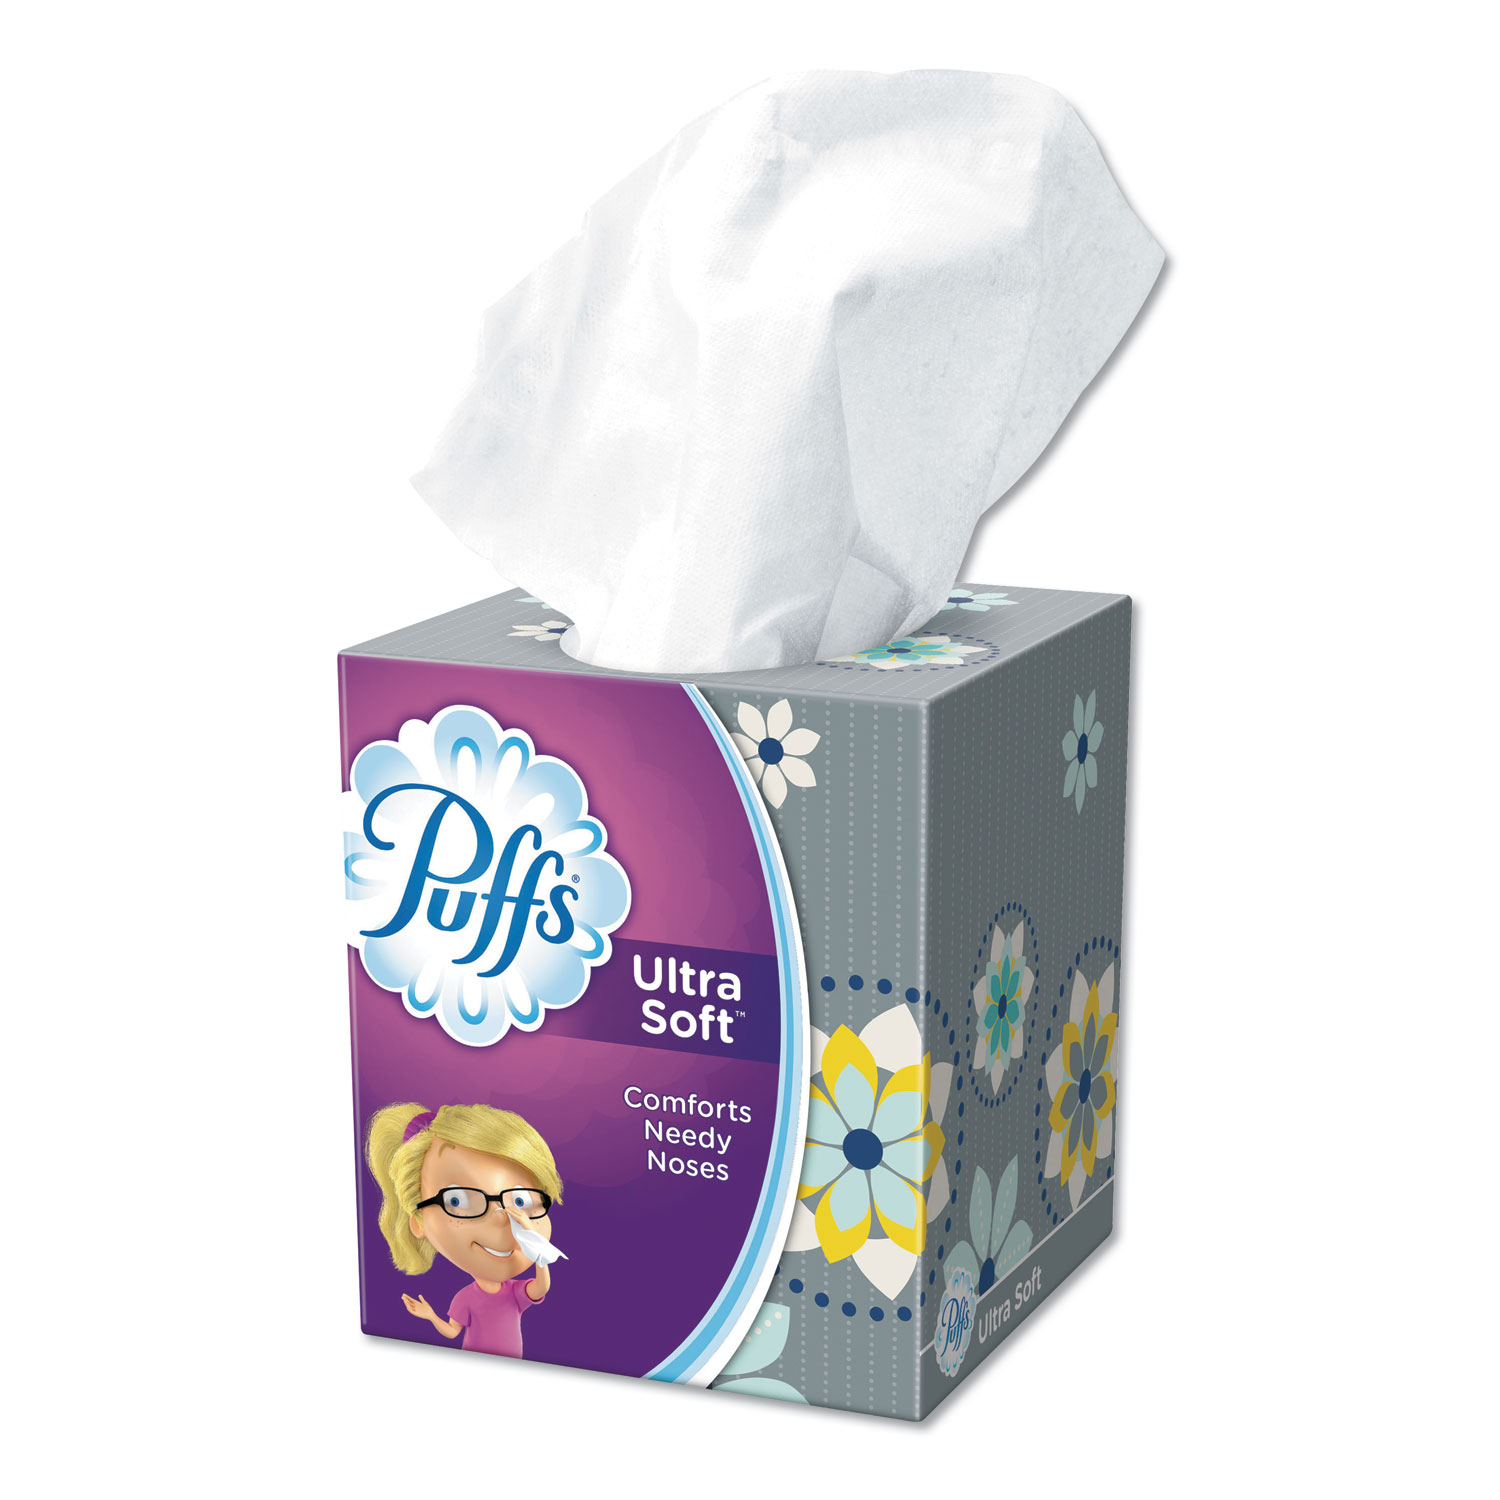  Puffs 35038 Ultra Soft Facial Tissue, 2-Ply, White, 56 Sheets/Box, 24 Boxes/Carton (PGC35038) 